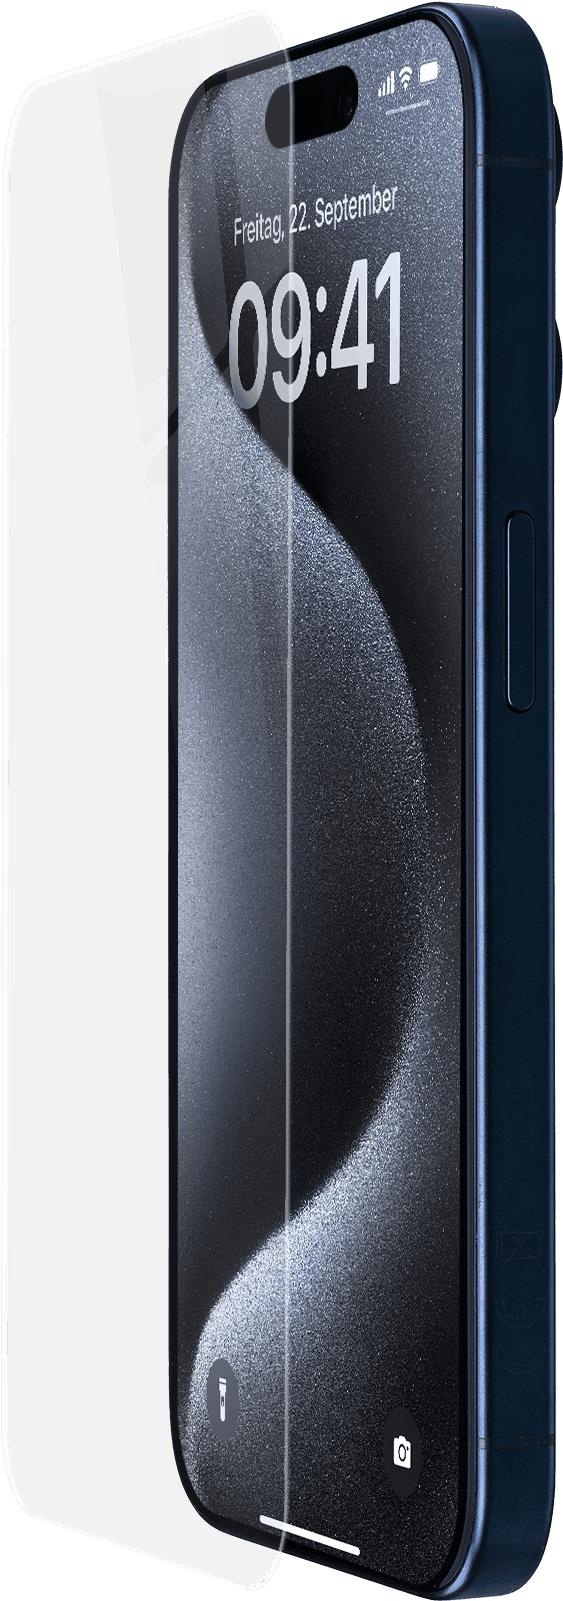 Artwizz SecondDisplay für iPhone 15 15 Pro -  Passend für Apple iPhone 15 und 15 Pro  Schützt auch bei Stößen vor Kratzern & Rissen,mit Anti-Splitterschutz  Kristallklare Sicht mit iPhone Original-Feeling  Verhindert Mikro-Kratzer (8181-3803)